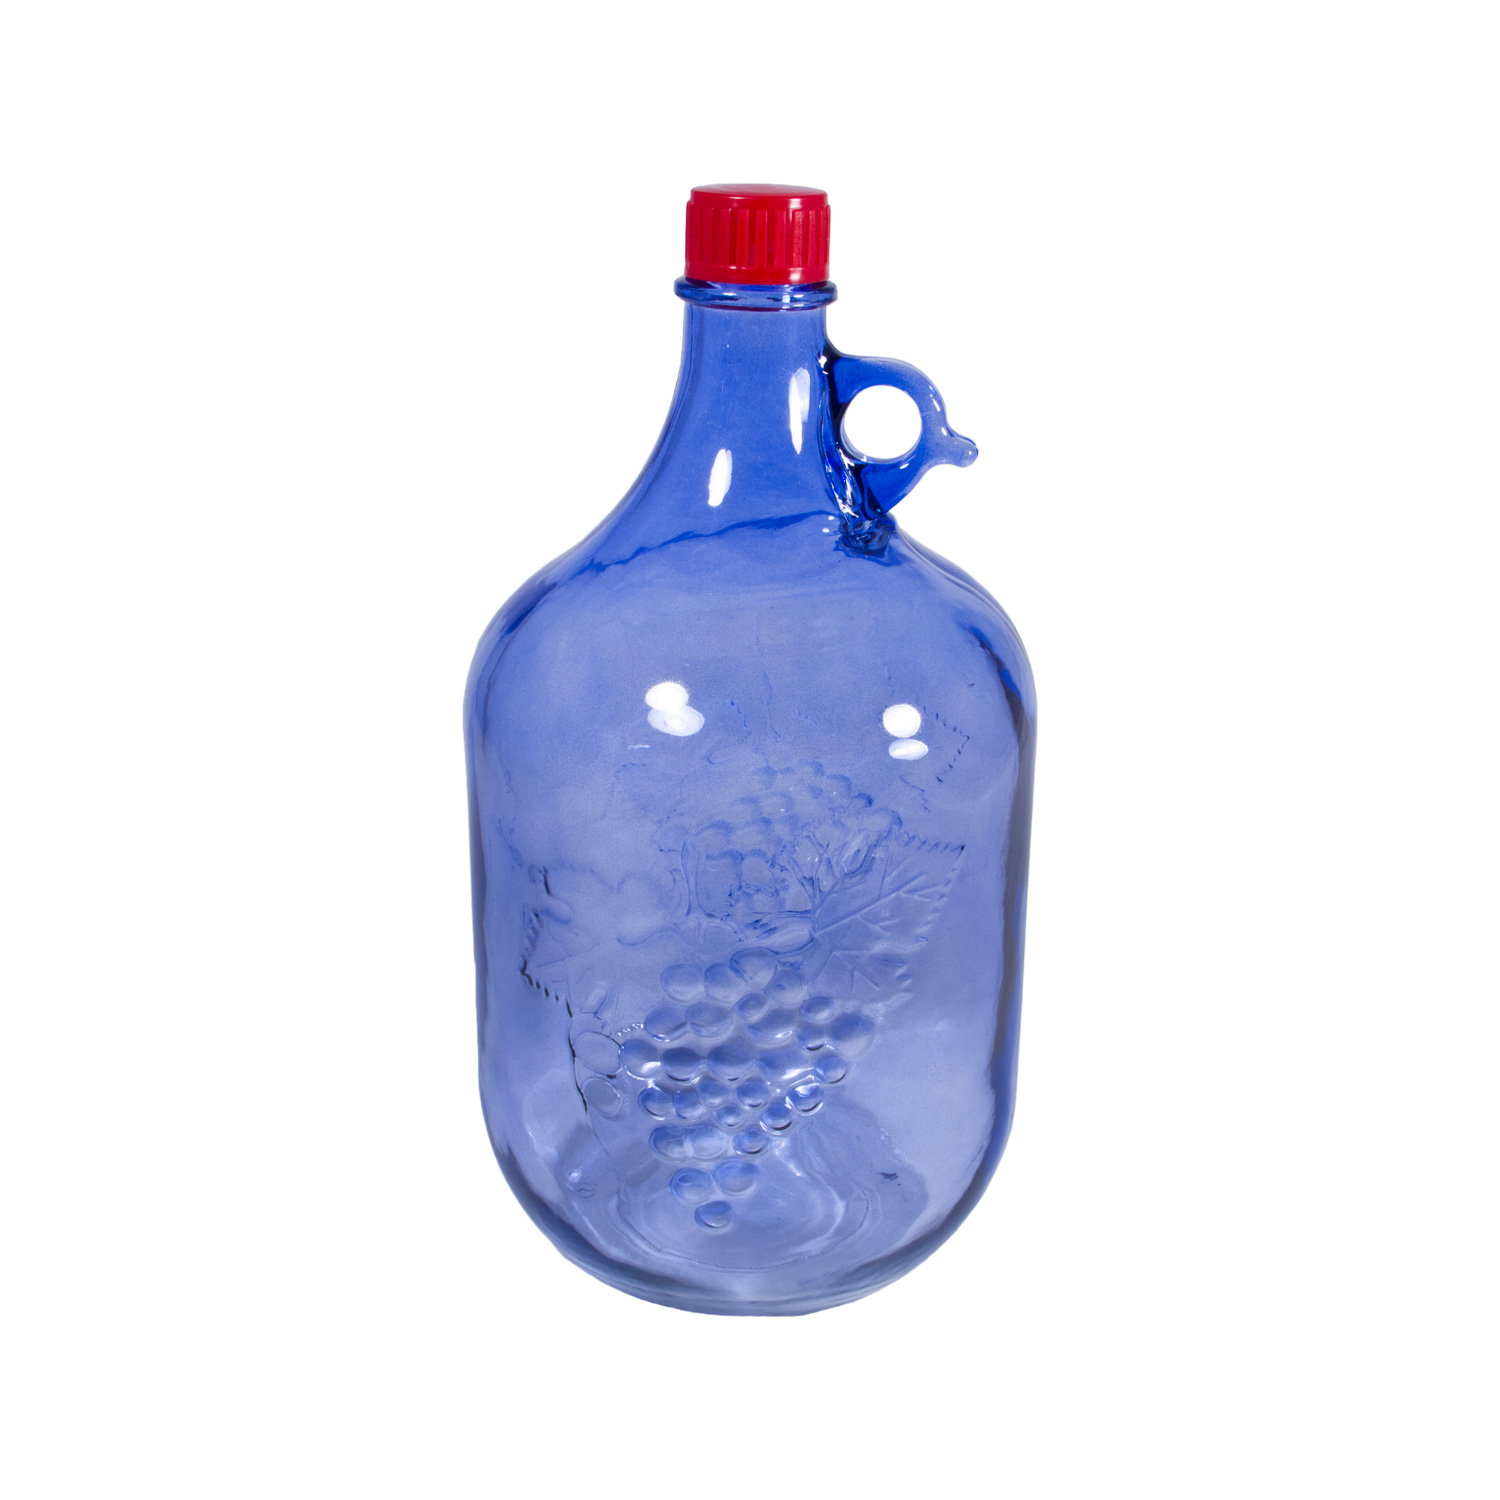 Стеклянная бутылка 5 литров. Бутыль лоза 5,0л.. Бутыль стеклянная 5л "лоза". Бутылка "лоза" 5 л.. Бутыль Сулия 5 л с краном.